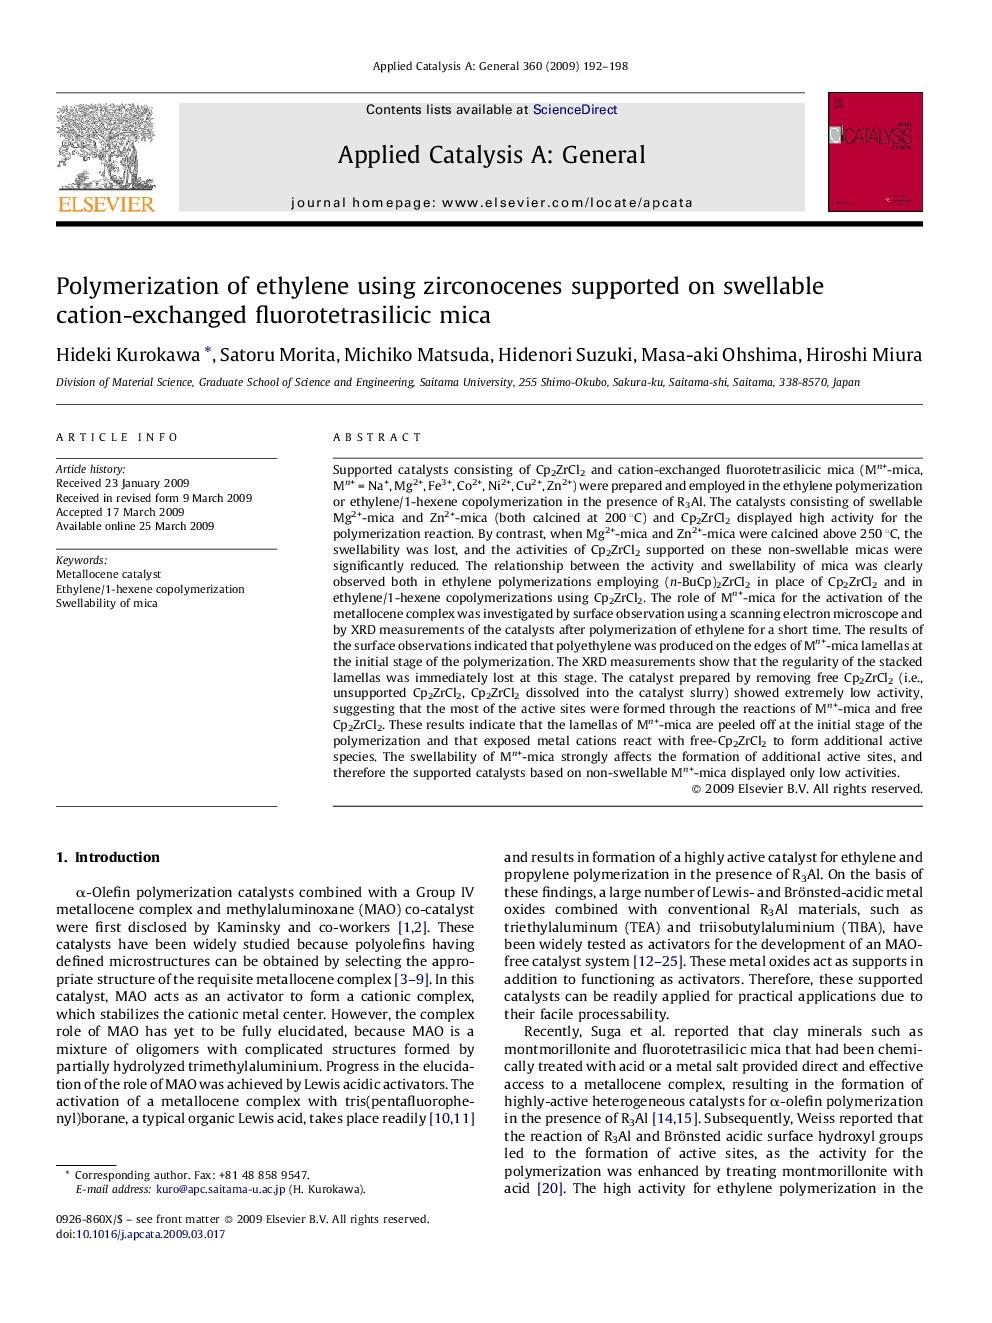 Polymerization of ethylene using zirconocenes supported on swellable cation-exchanged fluorotetrasilicic mica